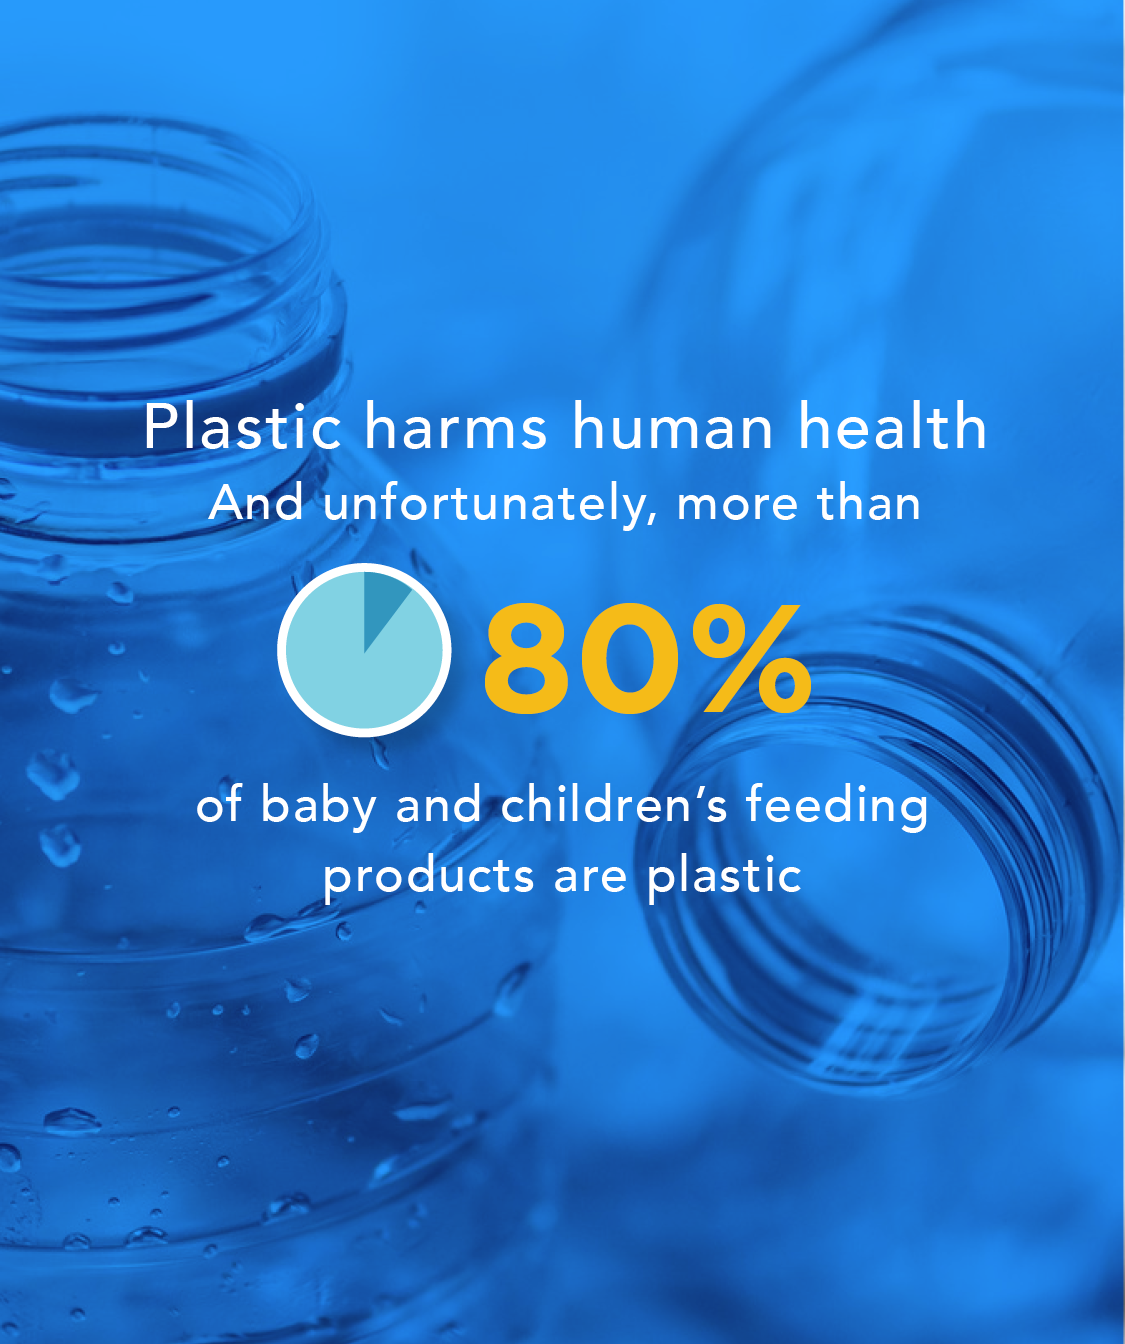 Plastic harms human health